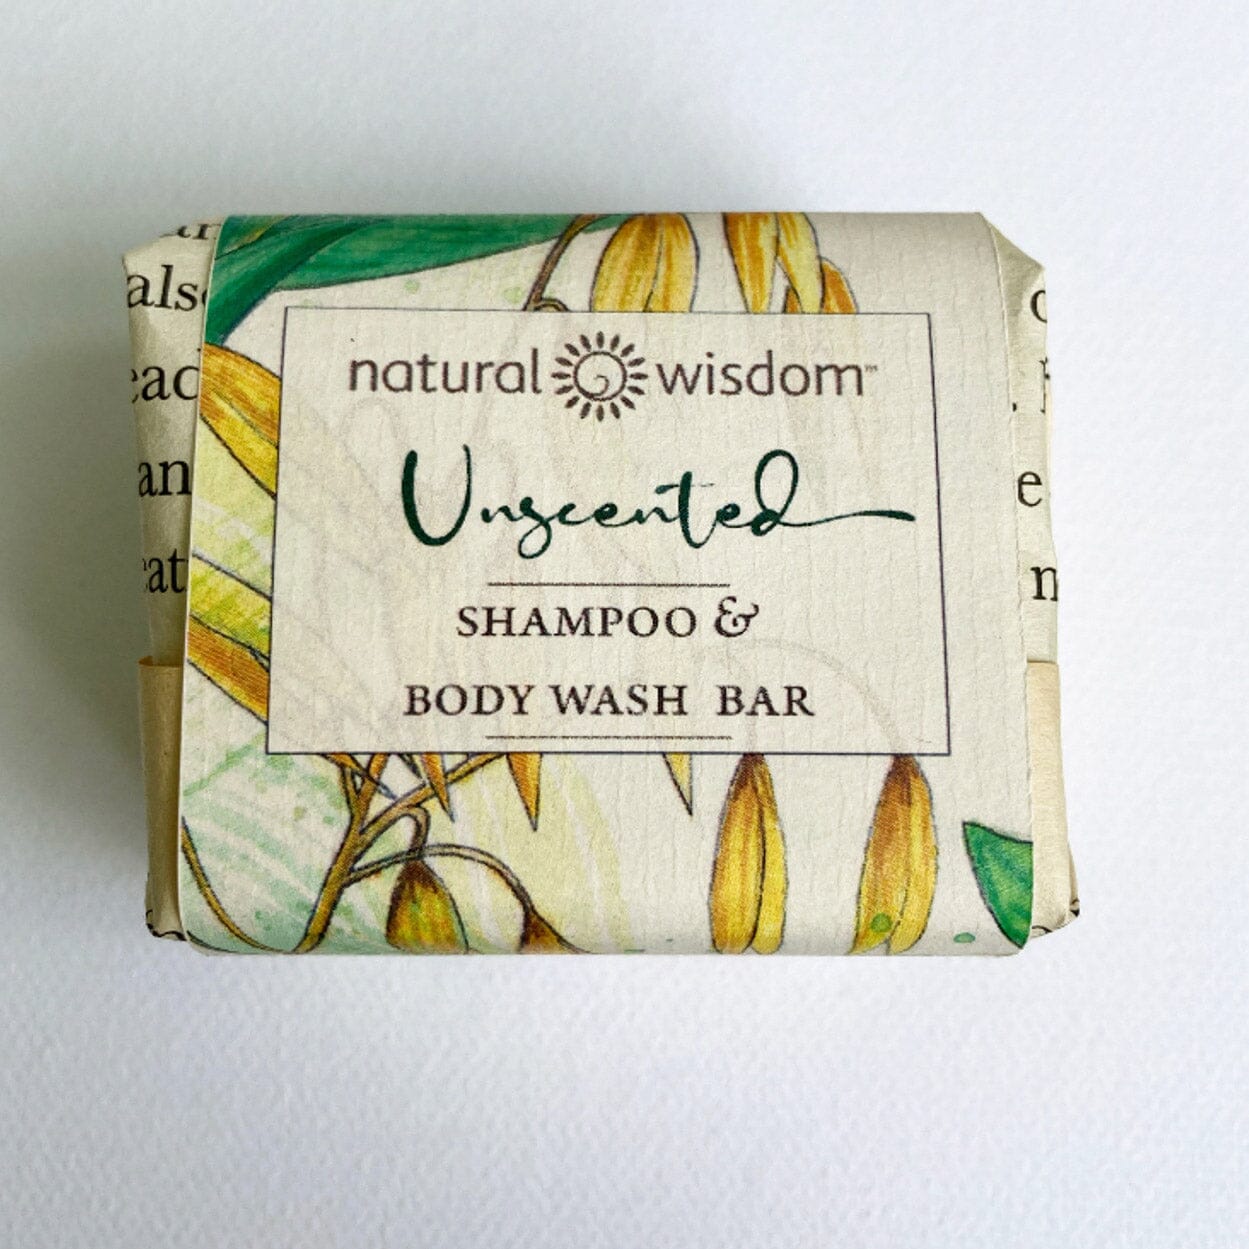 Unscented Oat Cream Shampoo & Body Wash Bar Shampoo Natural Wisdom - Genuine Selection